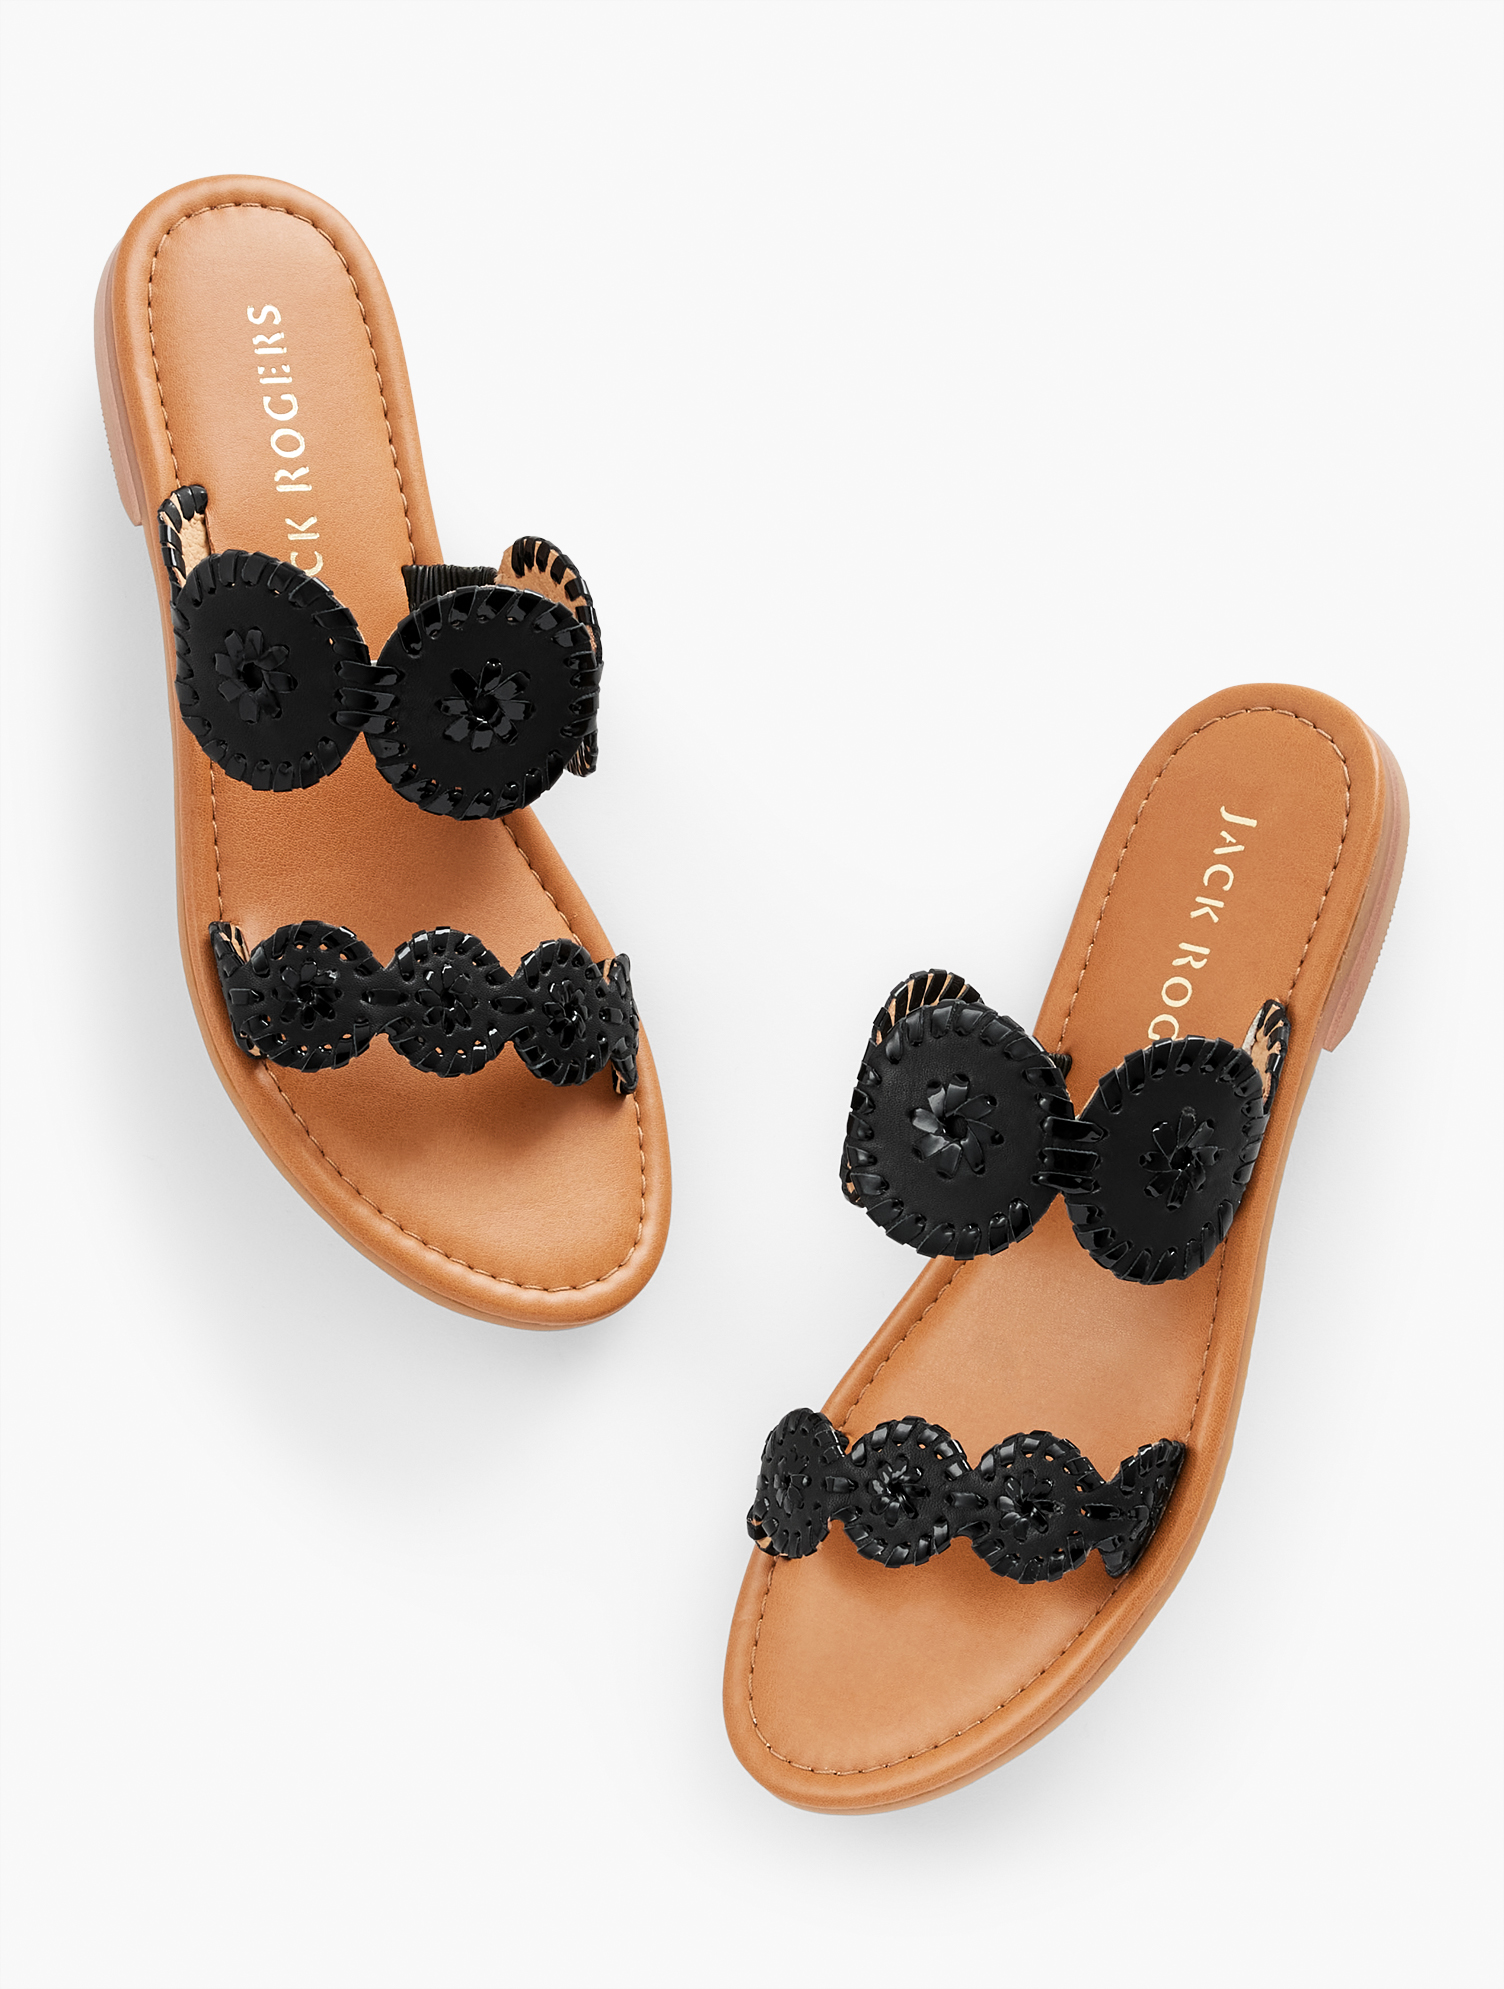 Talbots Lauren Ii Leather Sandals - Black - 5m